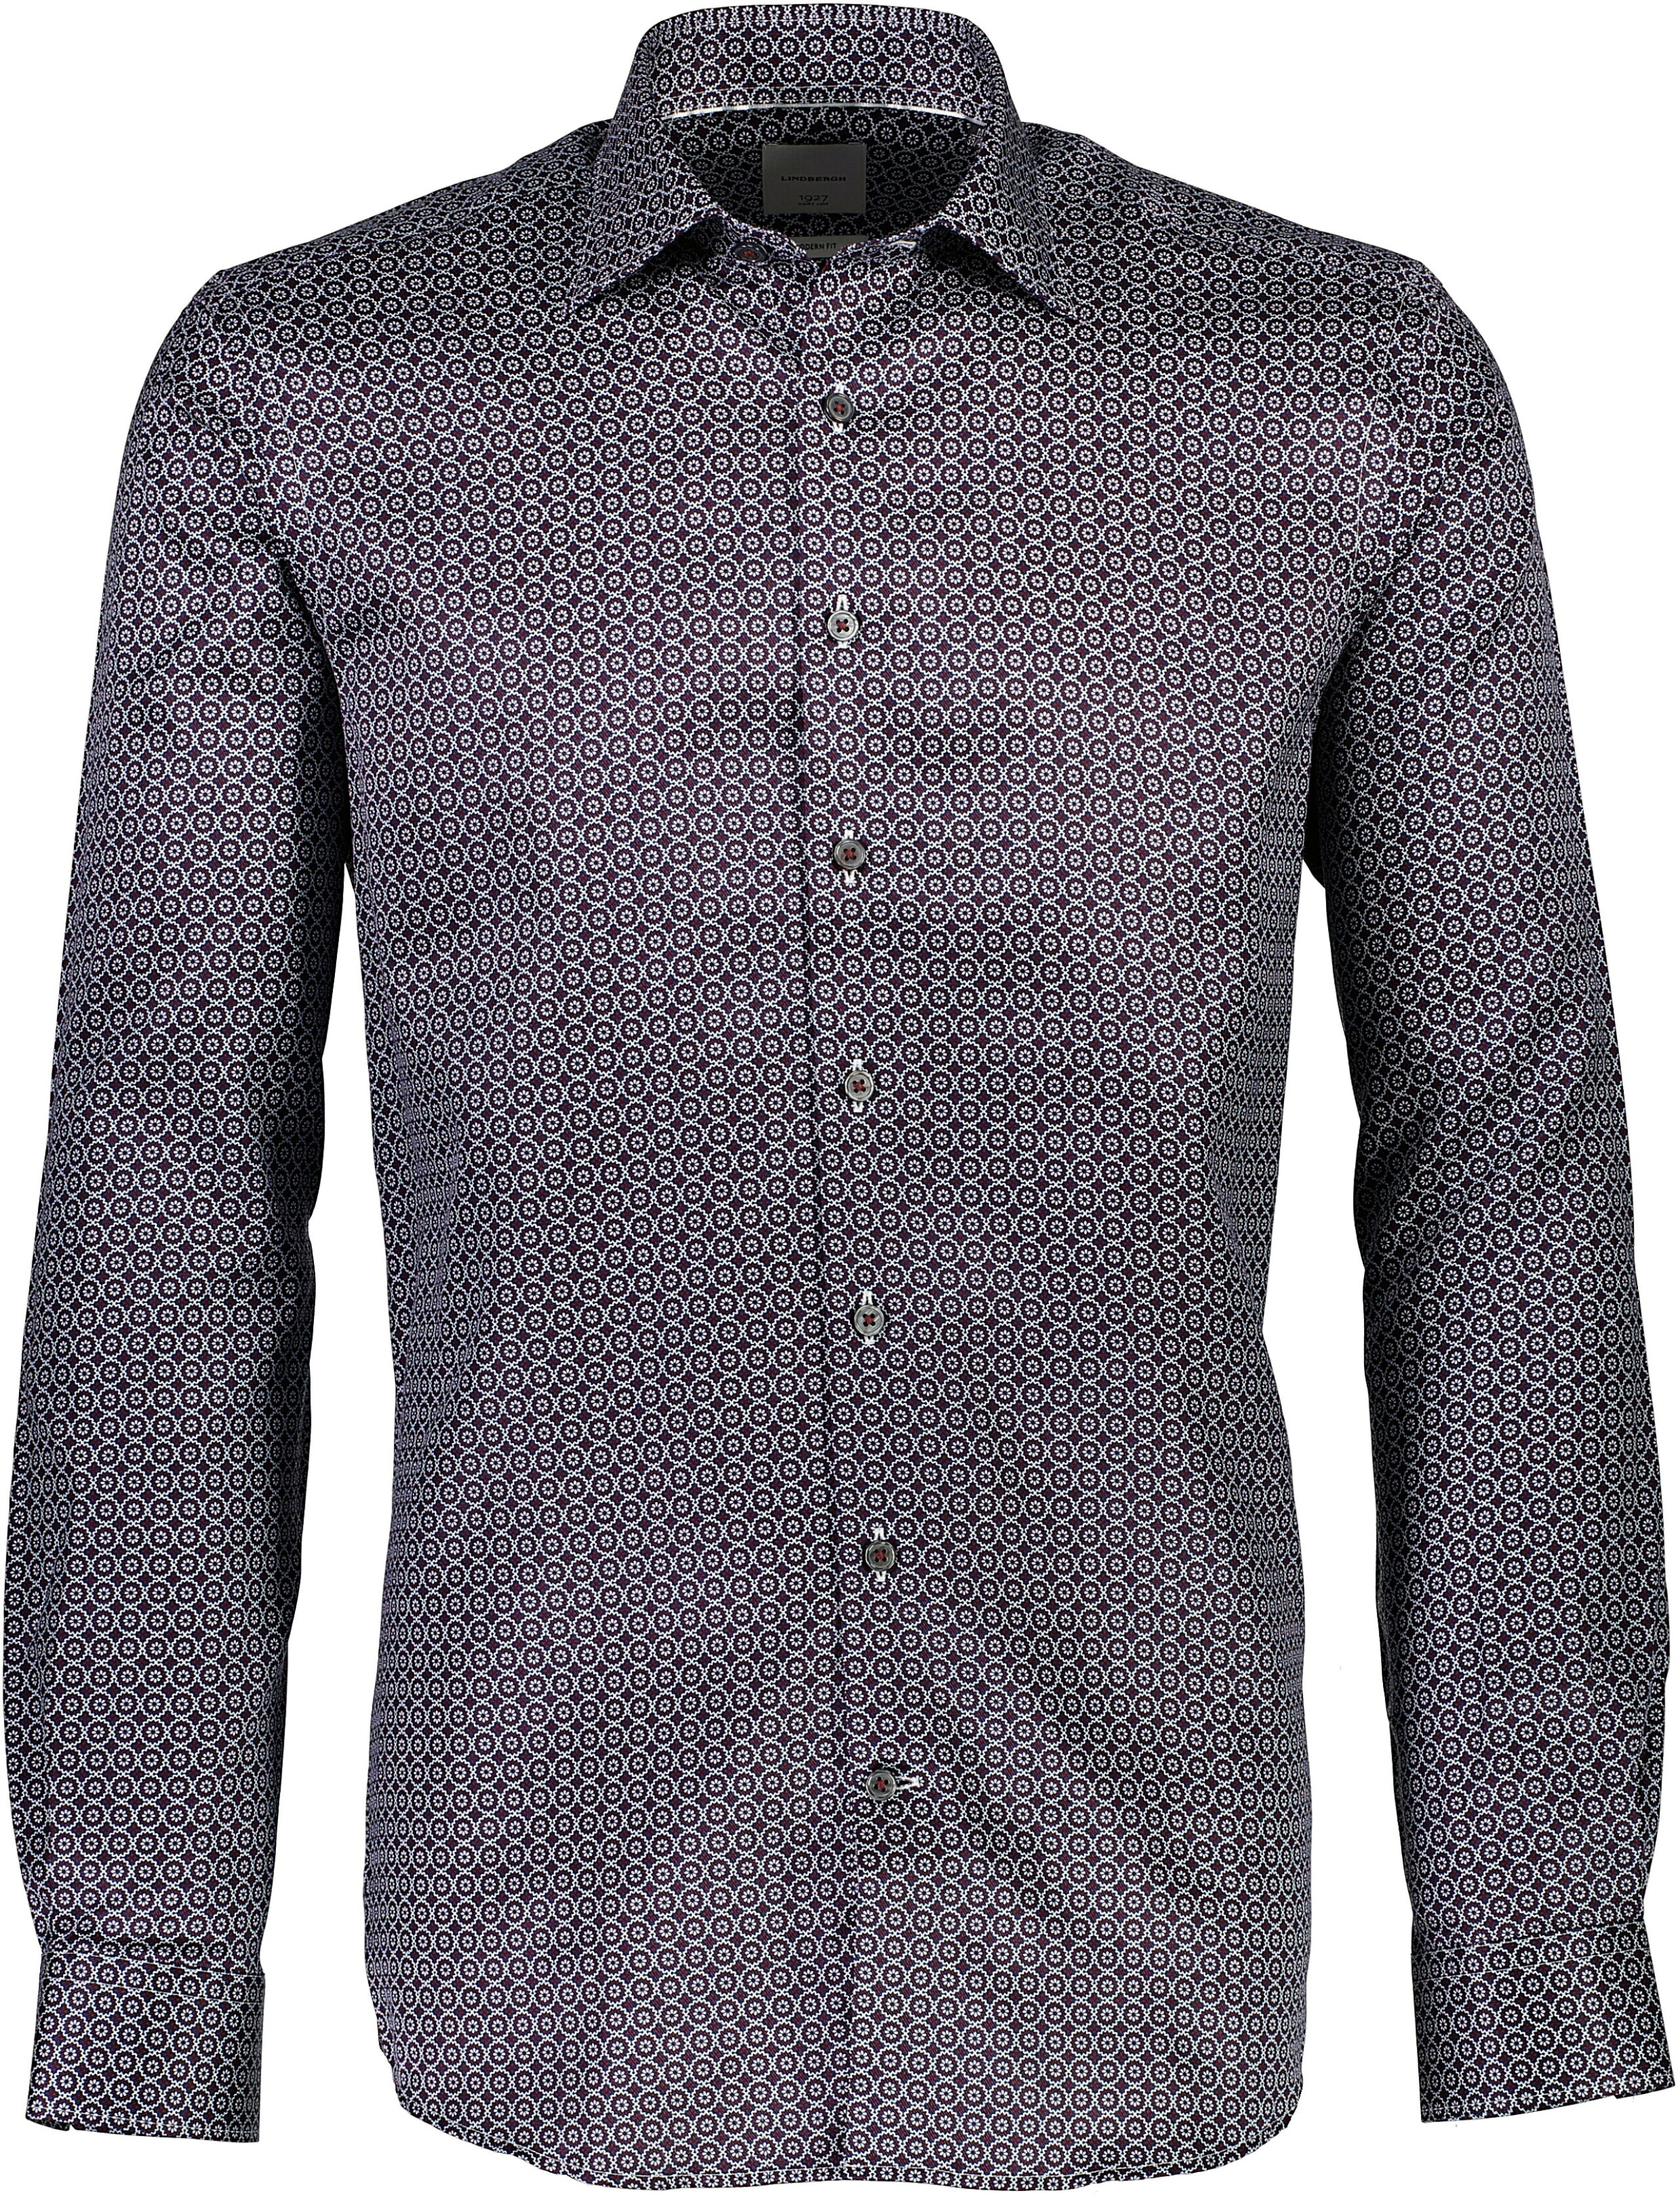 Business casual shirt 30-247150